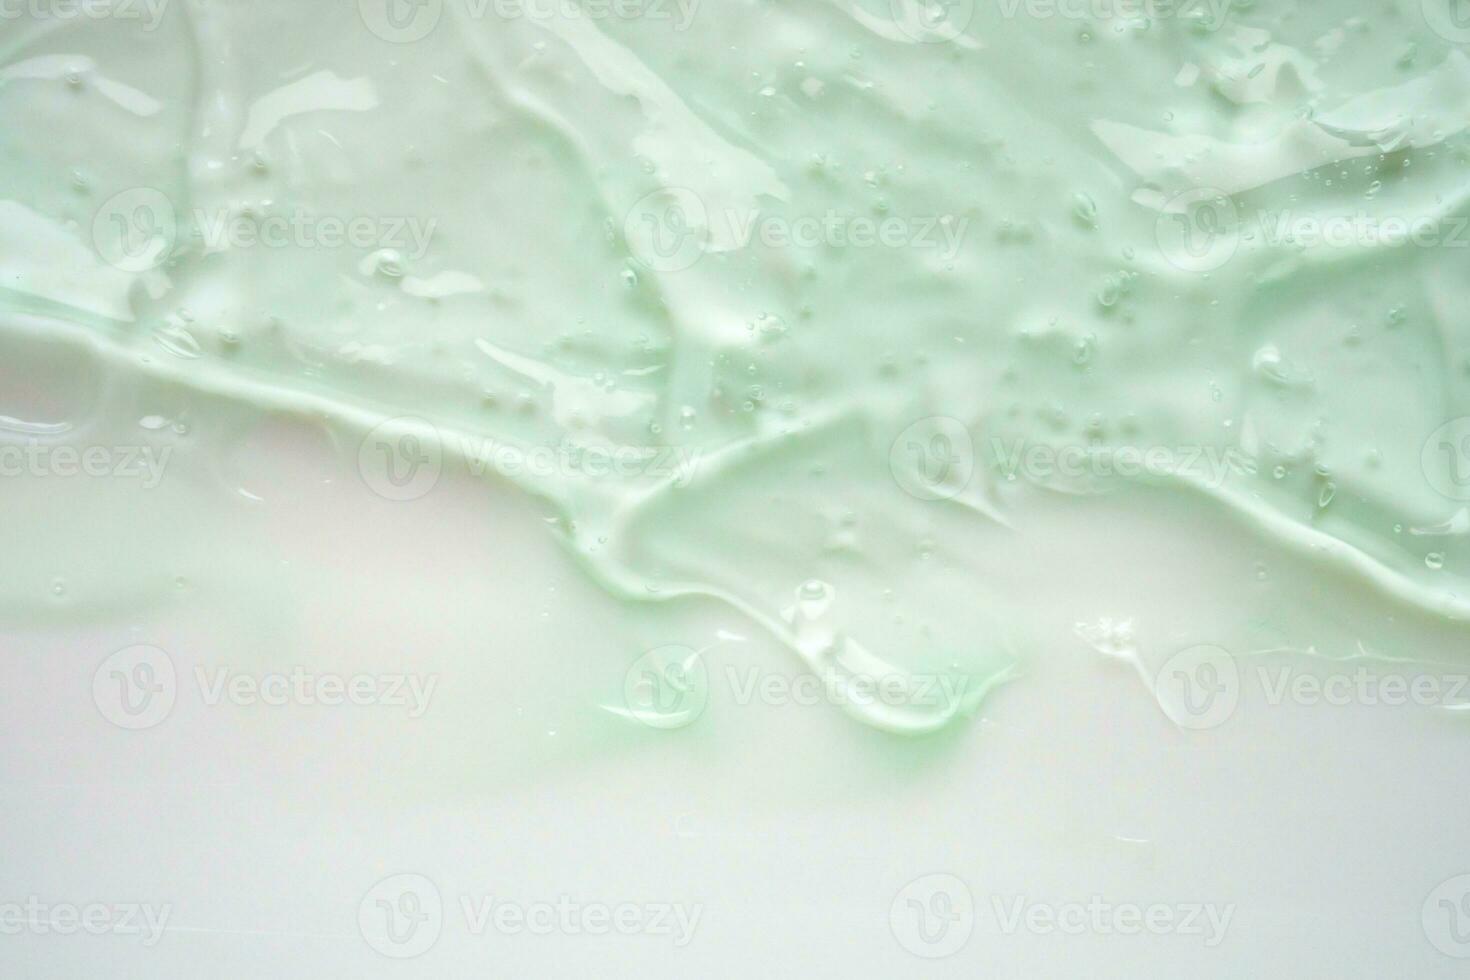 transparente Claro verde líquido sérum gel Cosmético textura fundo foto